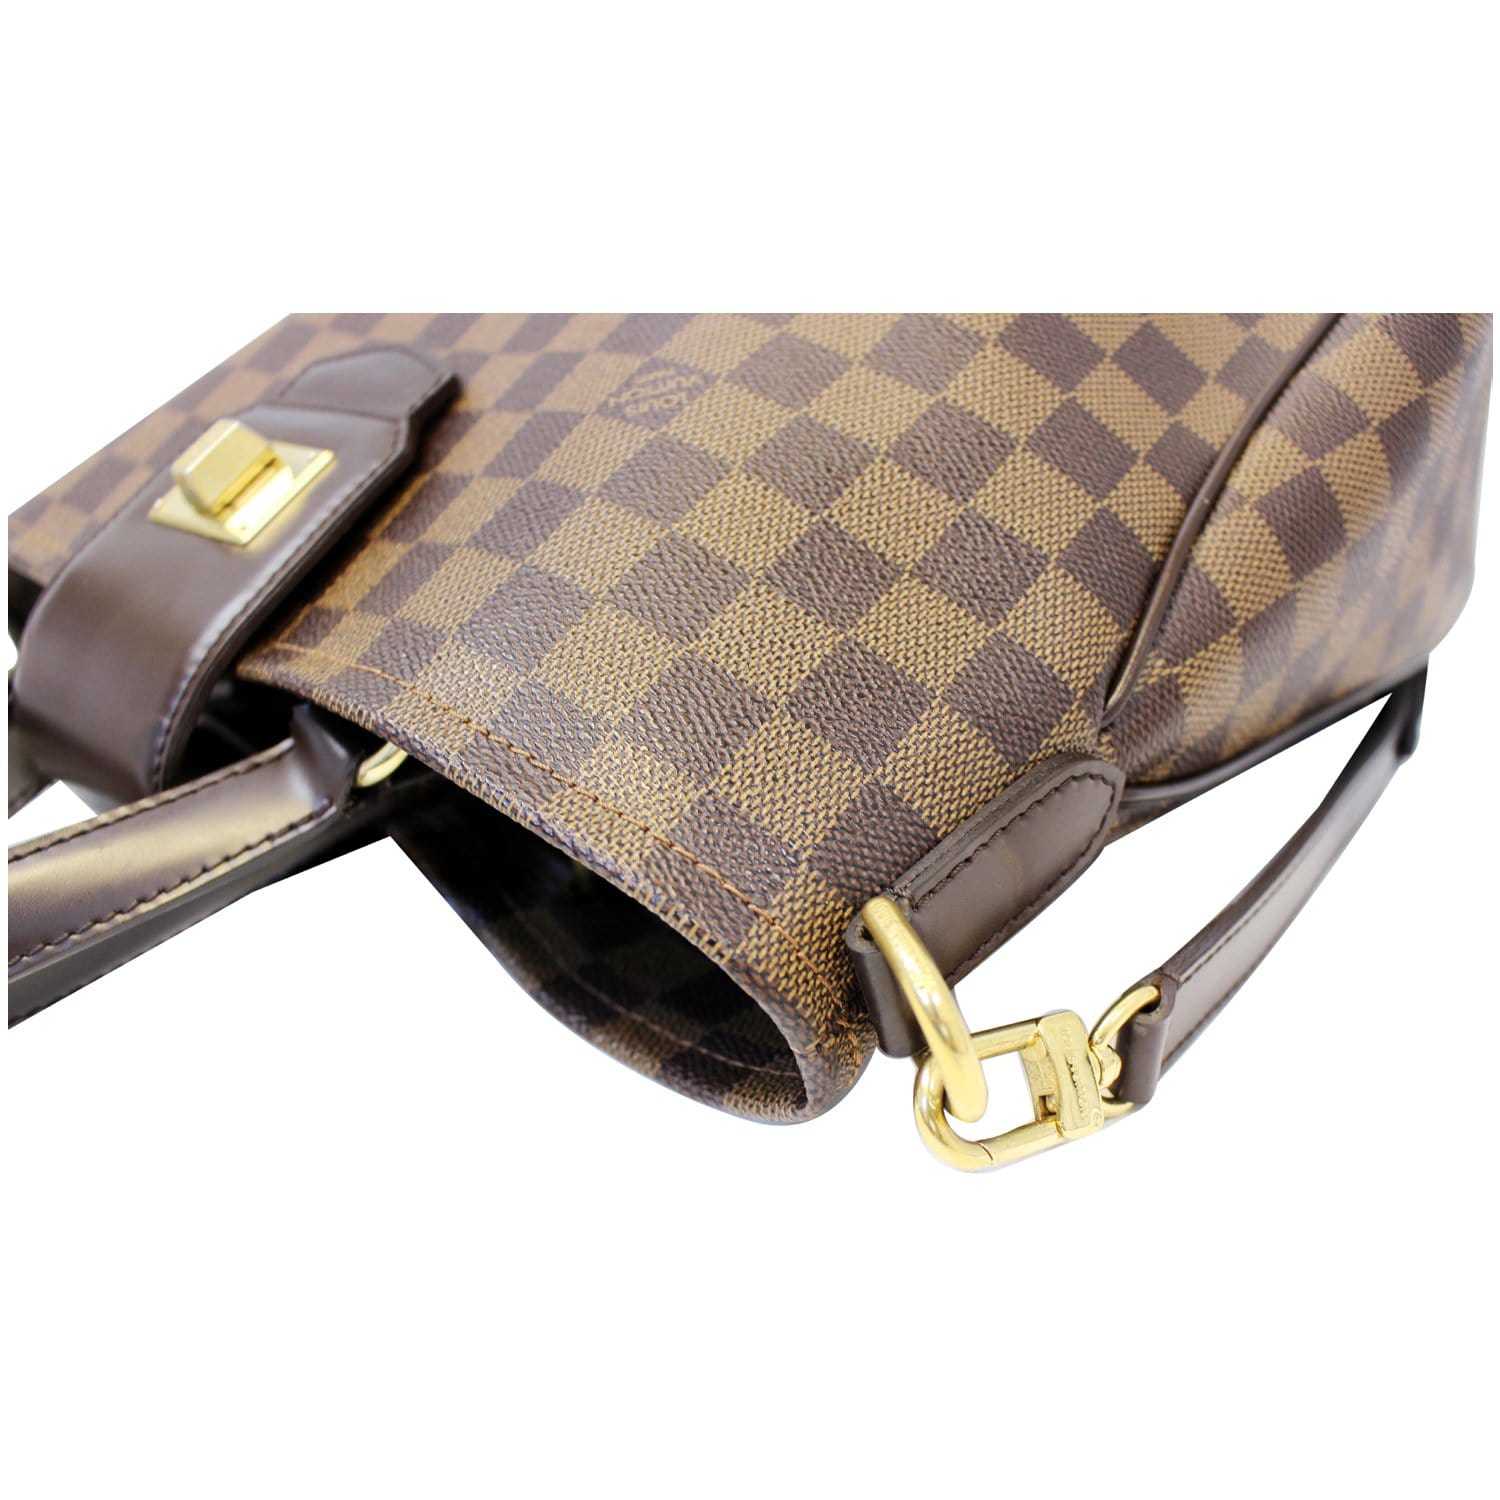 Louis-Vuitton-Damier-Ebene-Besace-Rosebery-Shoulder-Bag-N41178